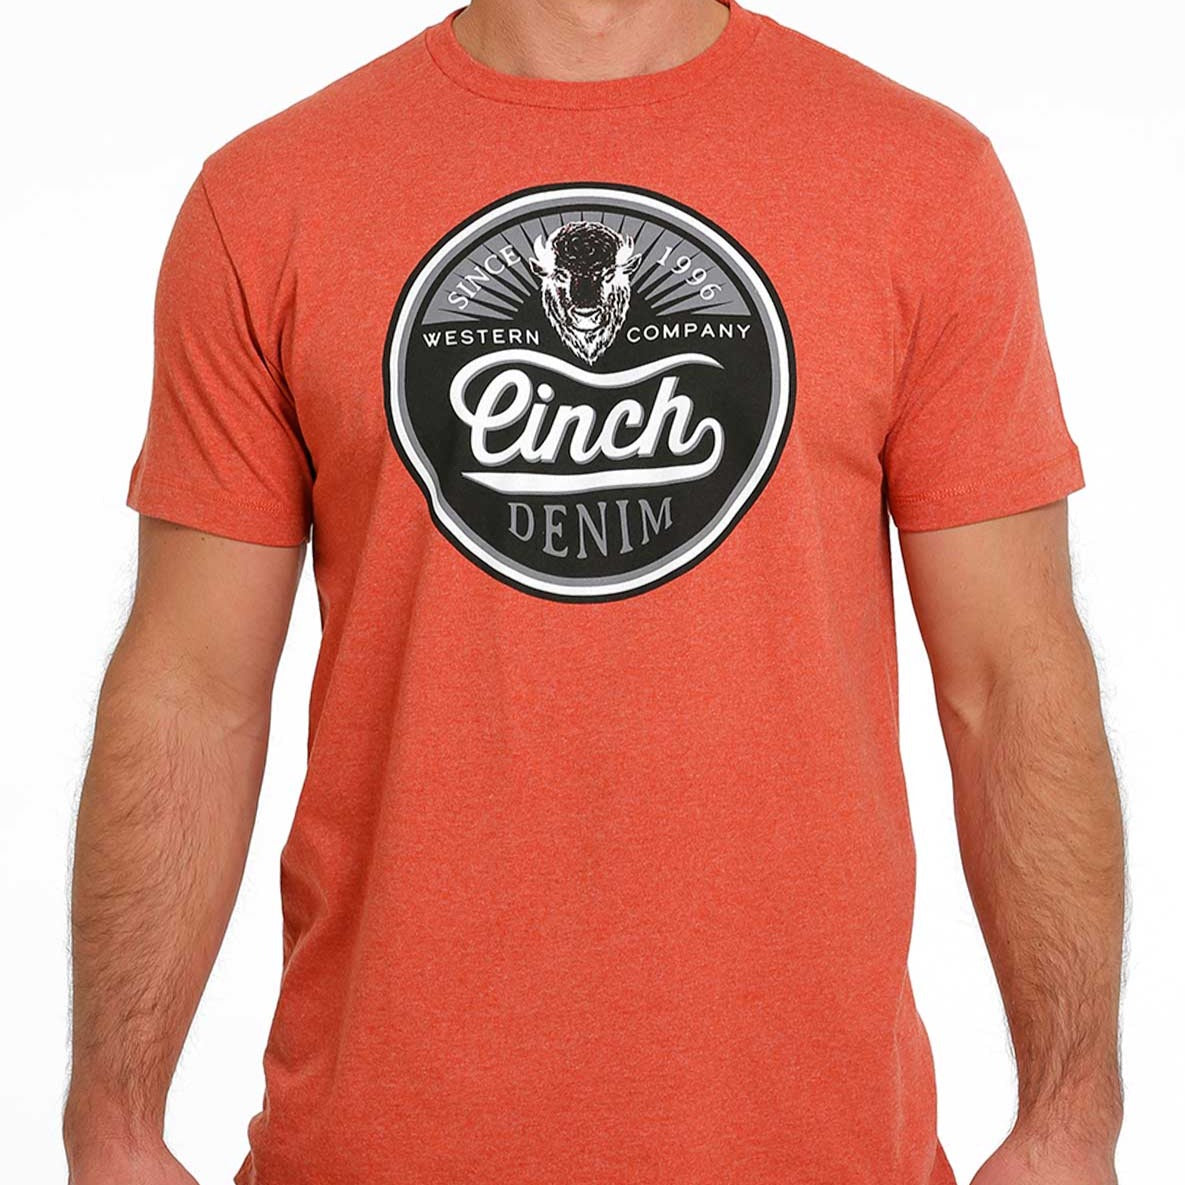 Cinch Men's Circle Graphic T-Shirt